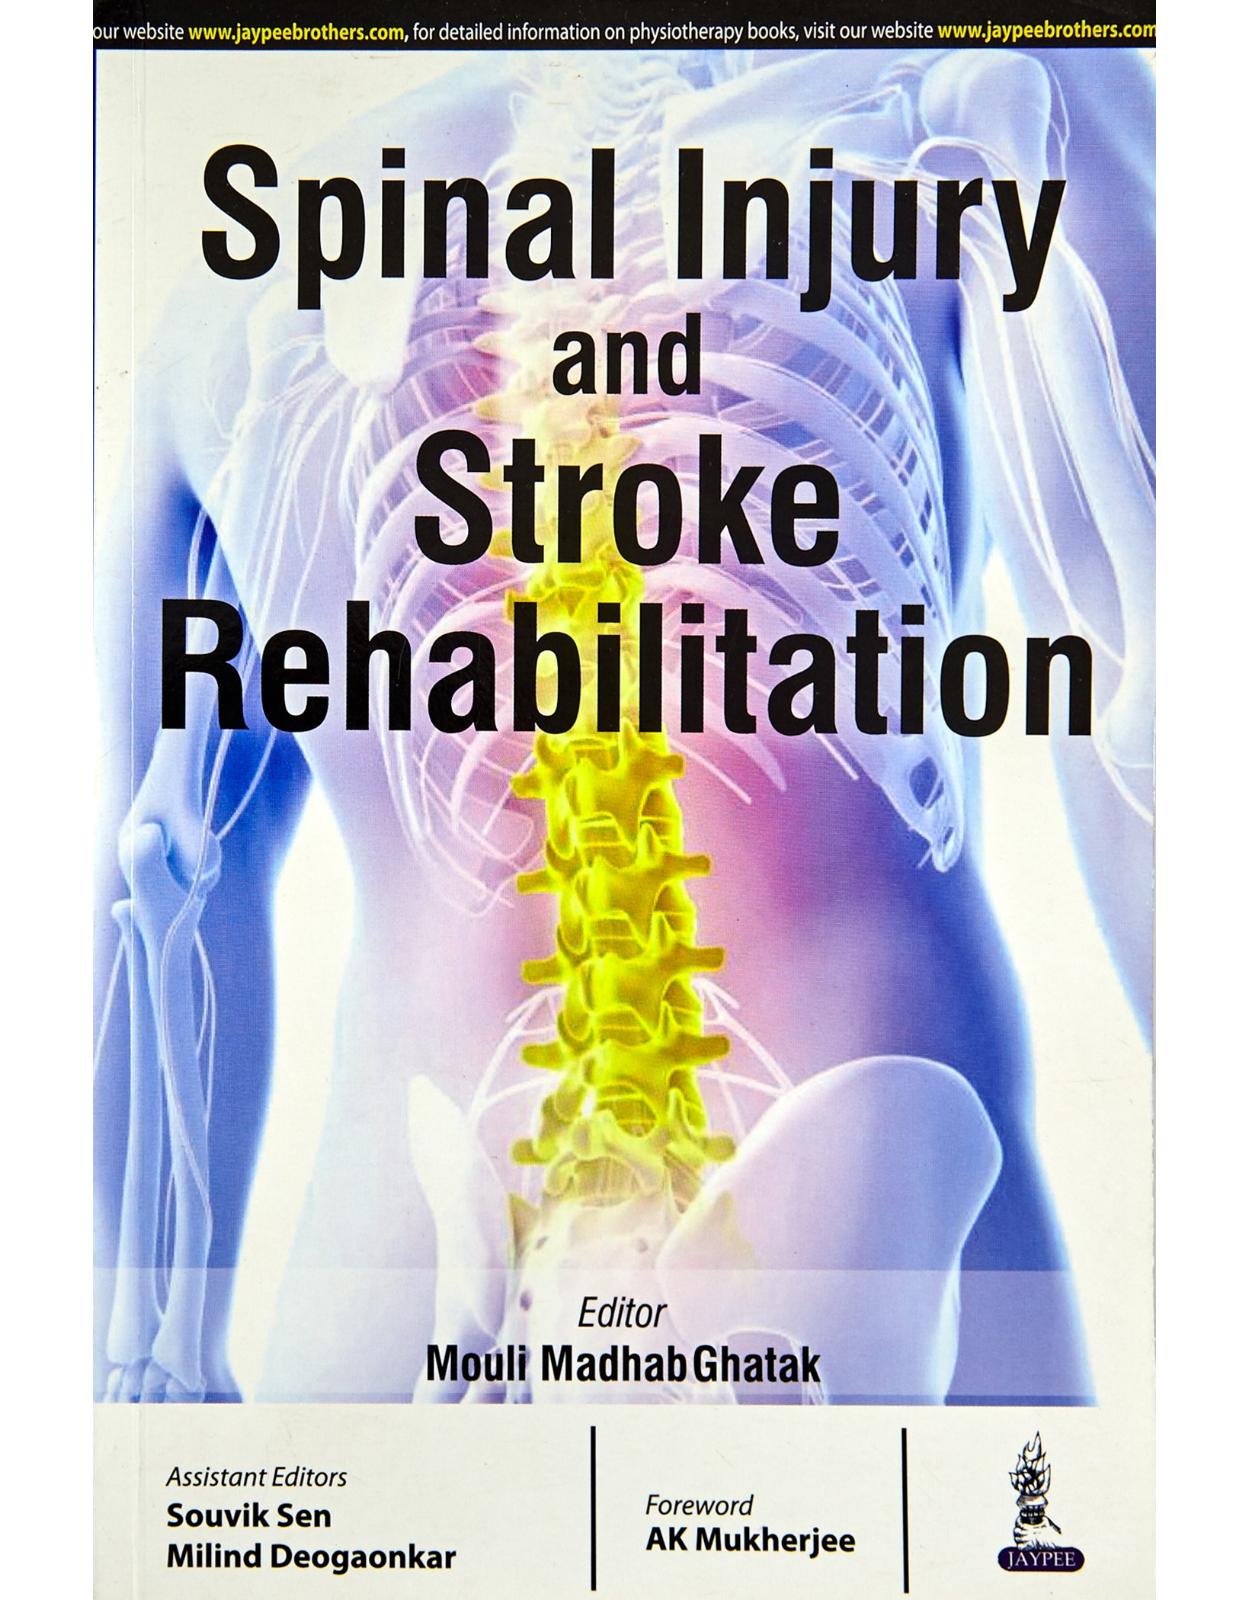 Spinal Injury and Stroke Rehabilitation